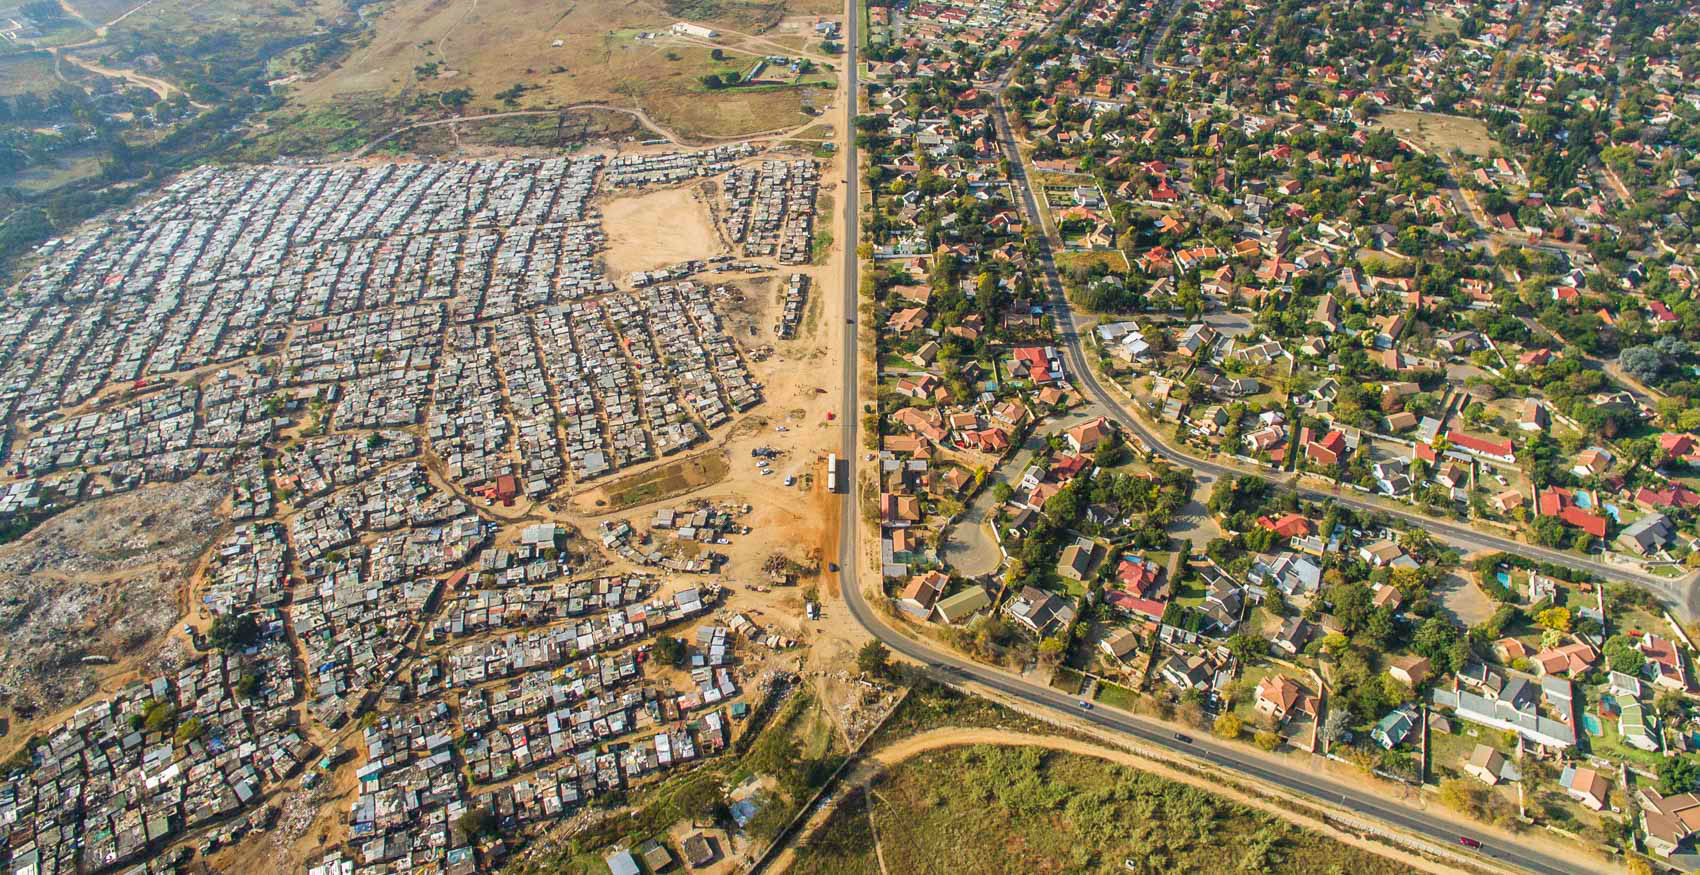 бидонвиль Kya Sands (слева) и пригород Bloubosrand (справа) в Йоханнесбурге, ЮАР